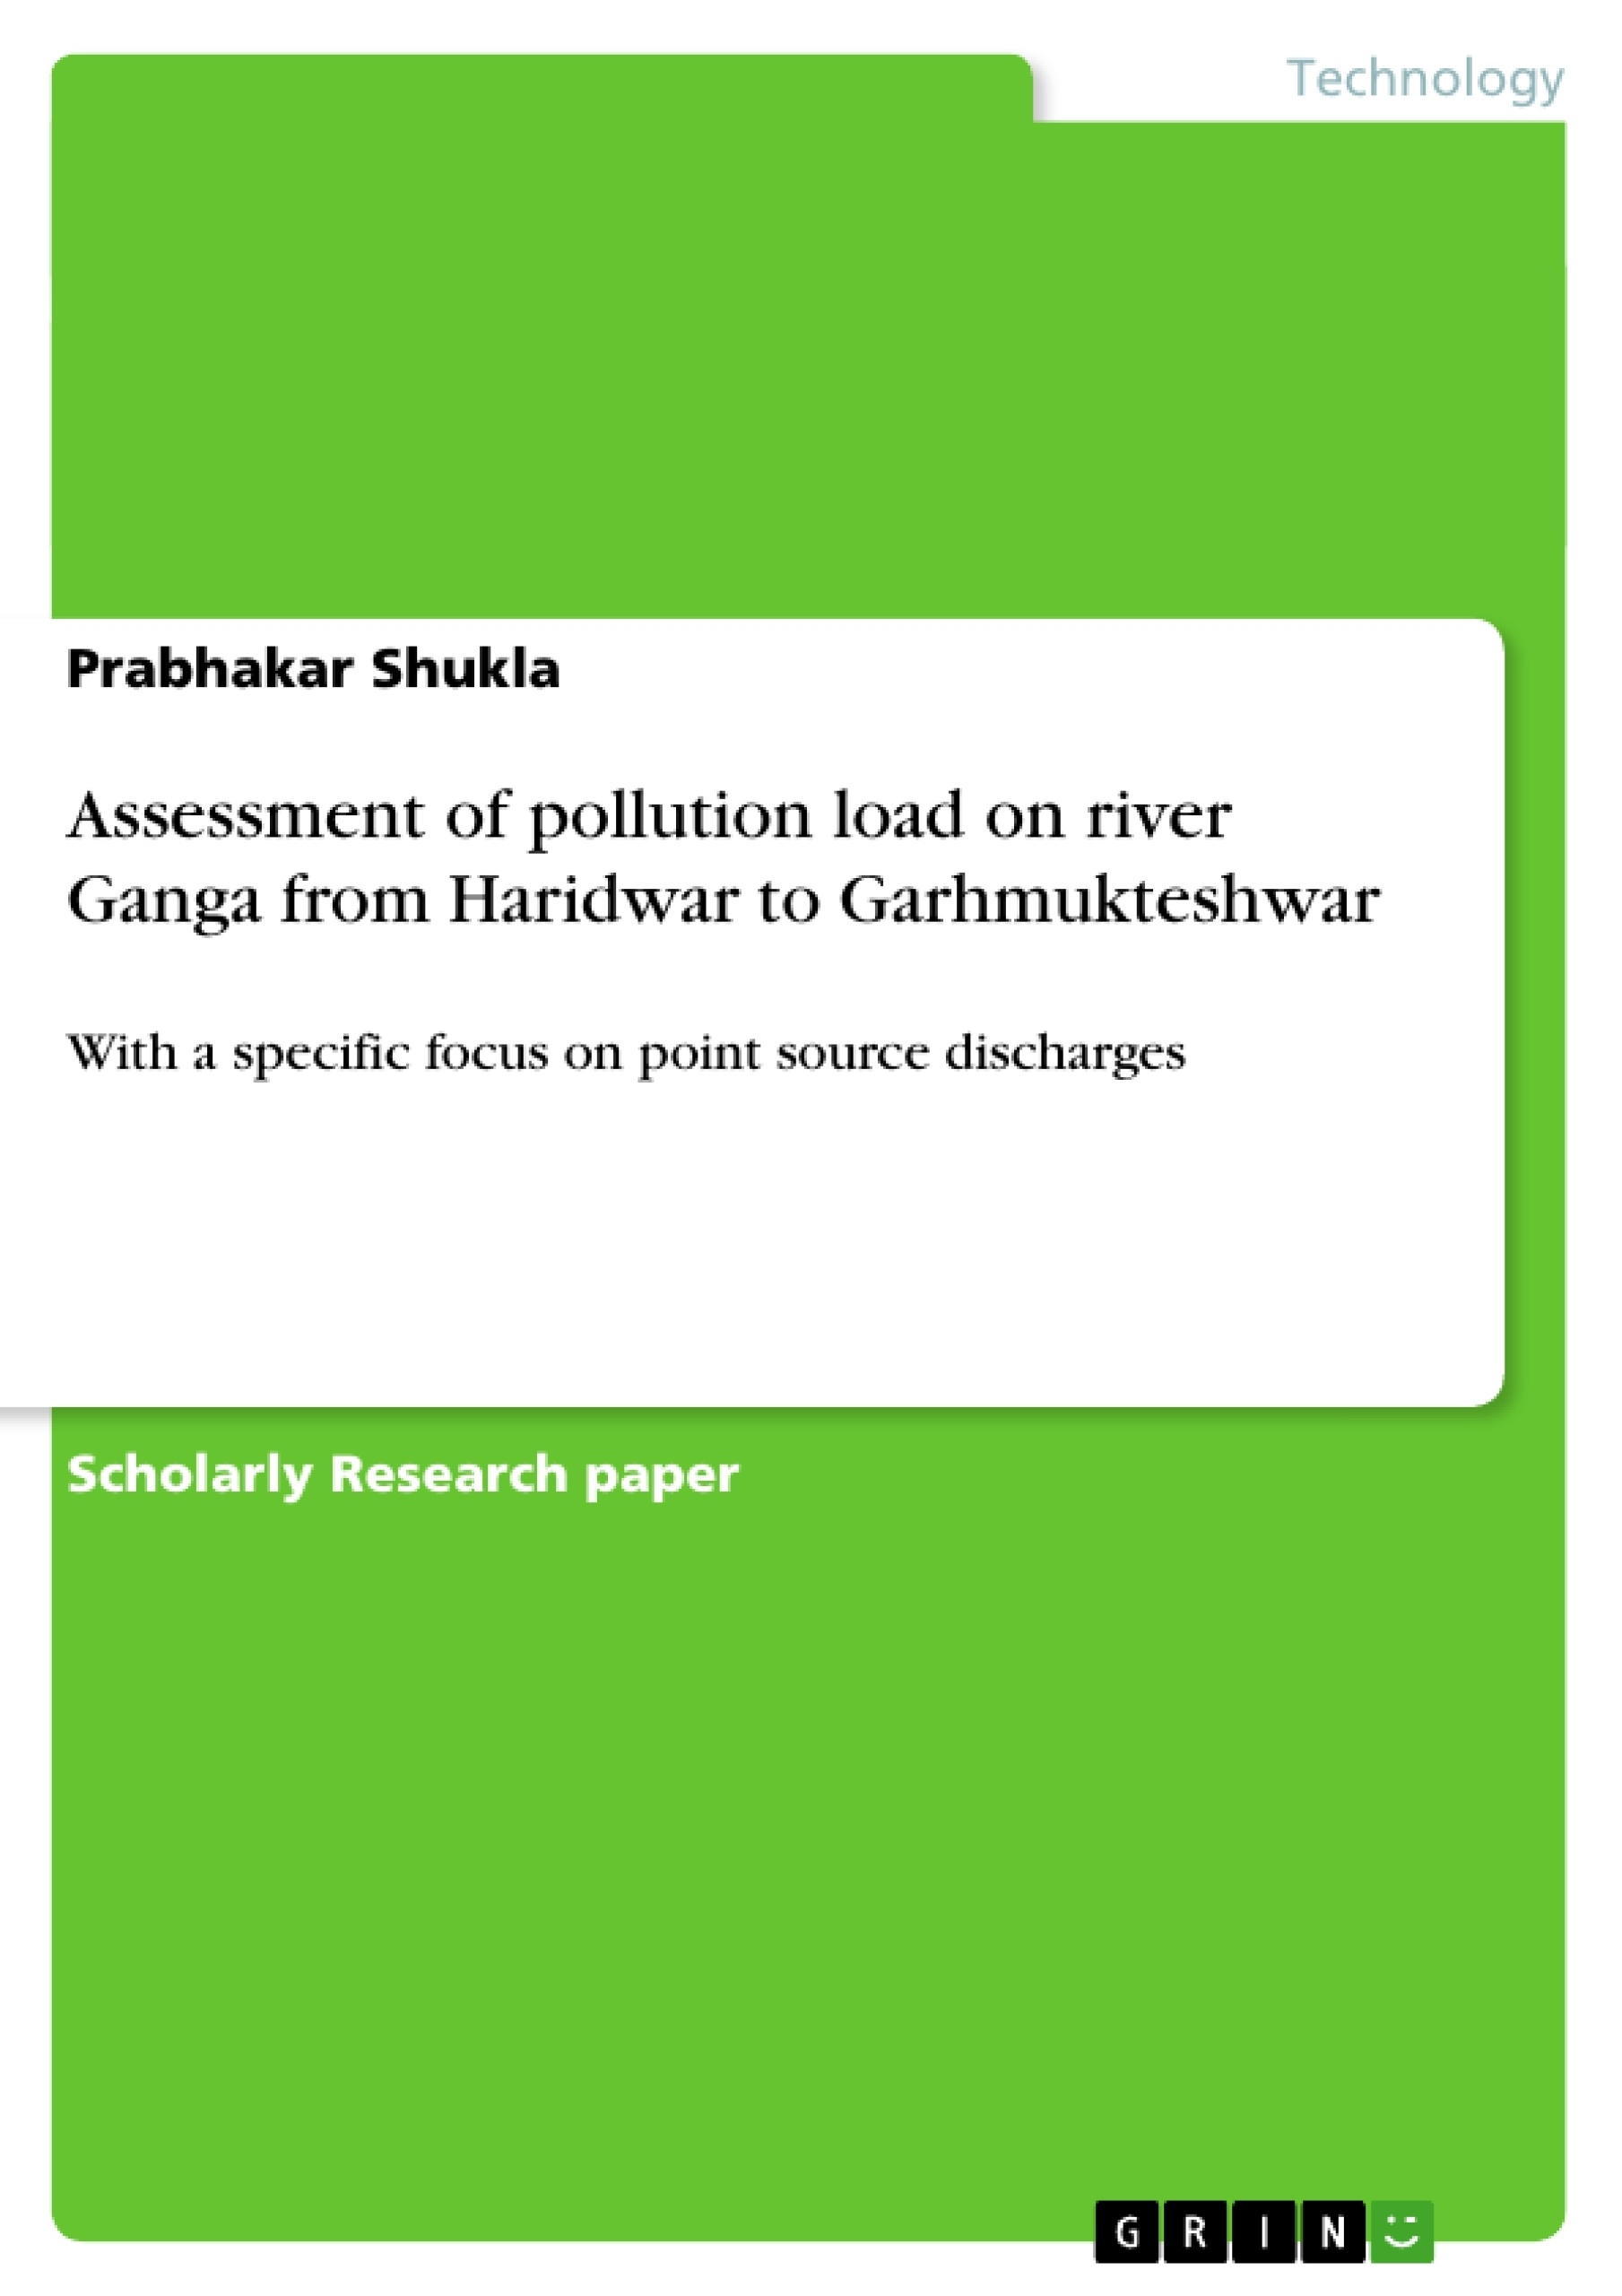 Title: Assessment of pollution load on river Ganga from Haridwar to Garhmukteshwar